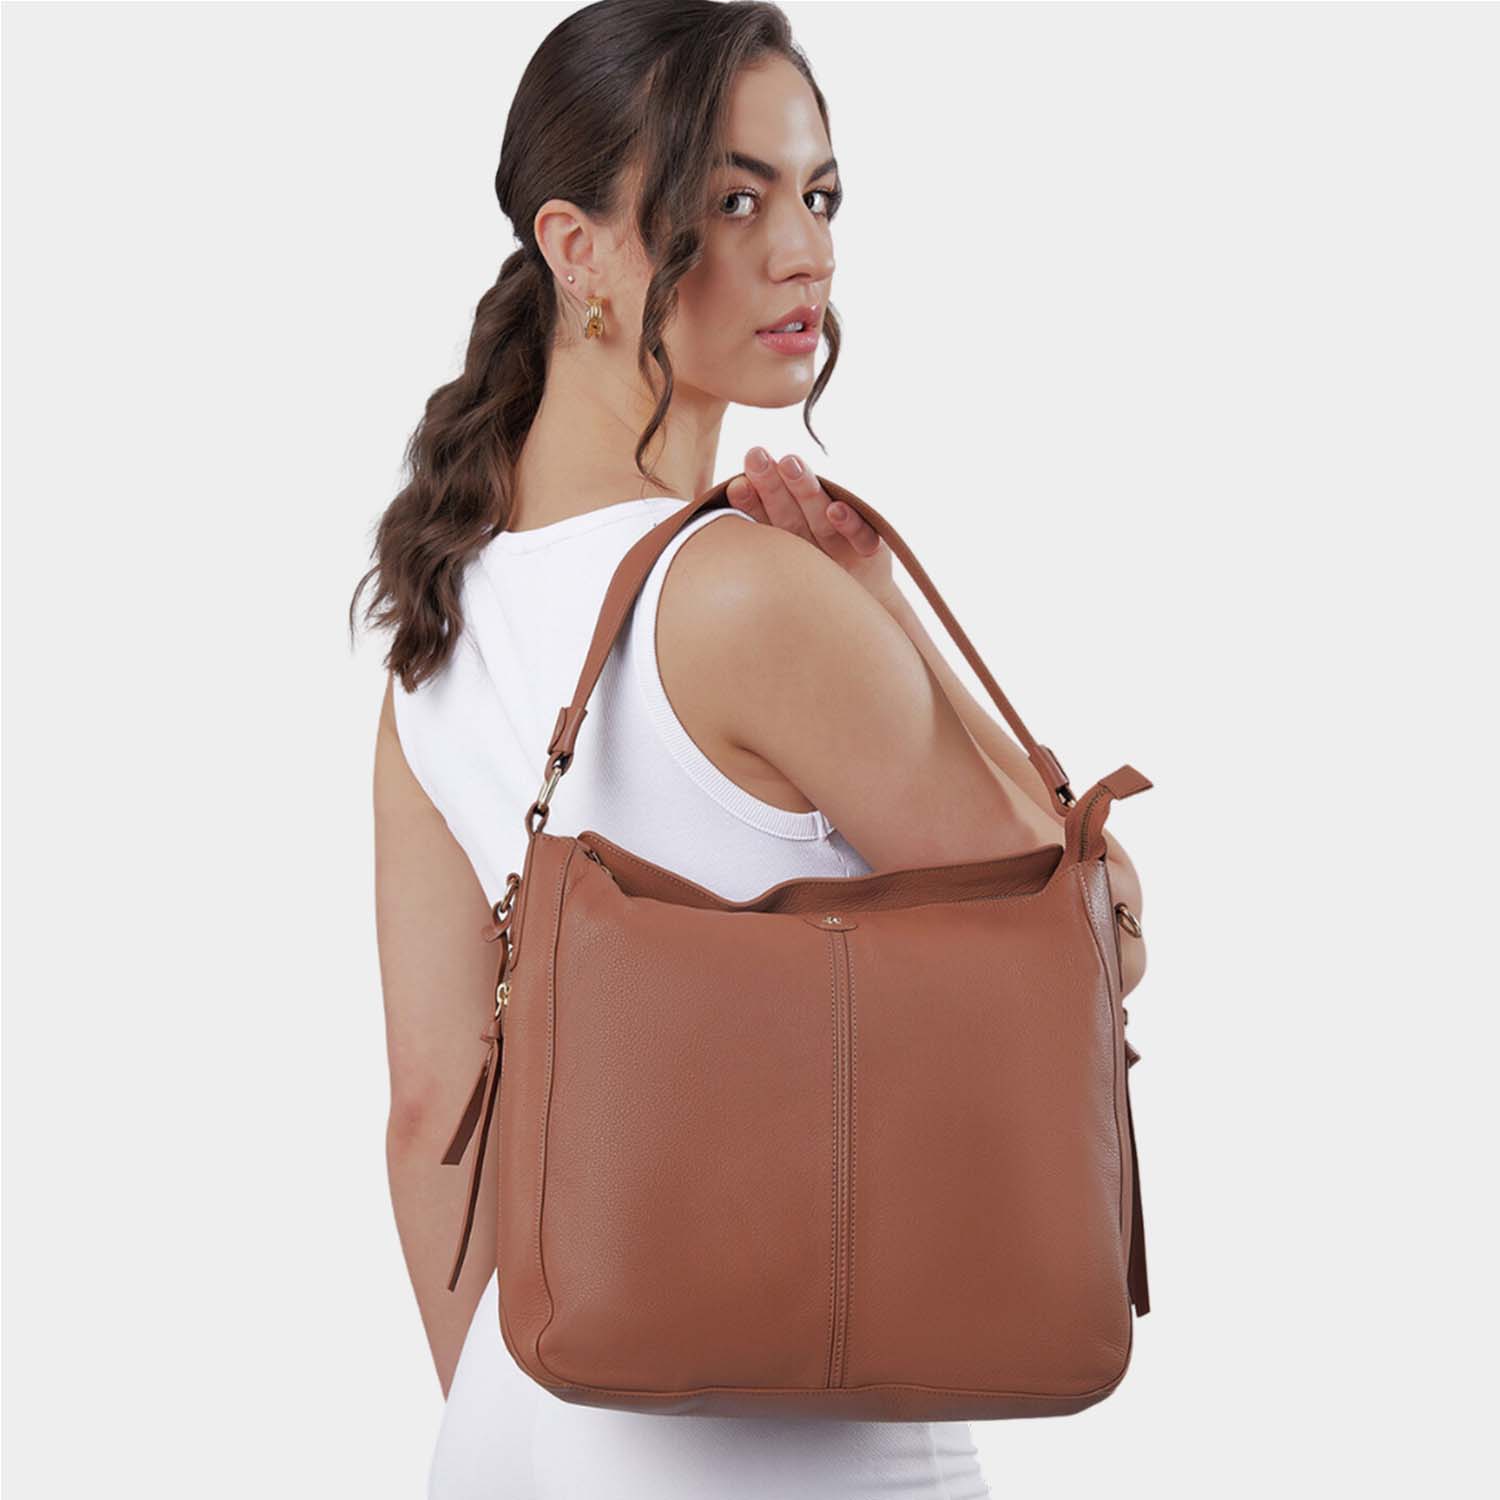 Ivanna - The Handbag/Sling Bag - Tan - Tortoise  